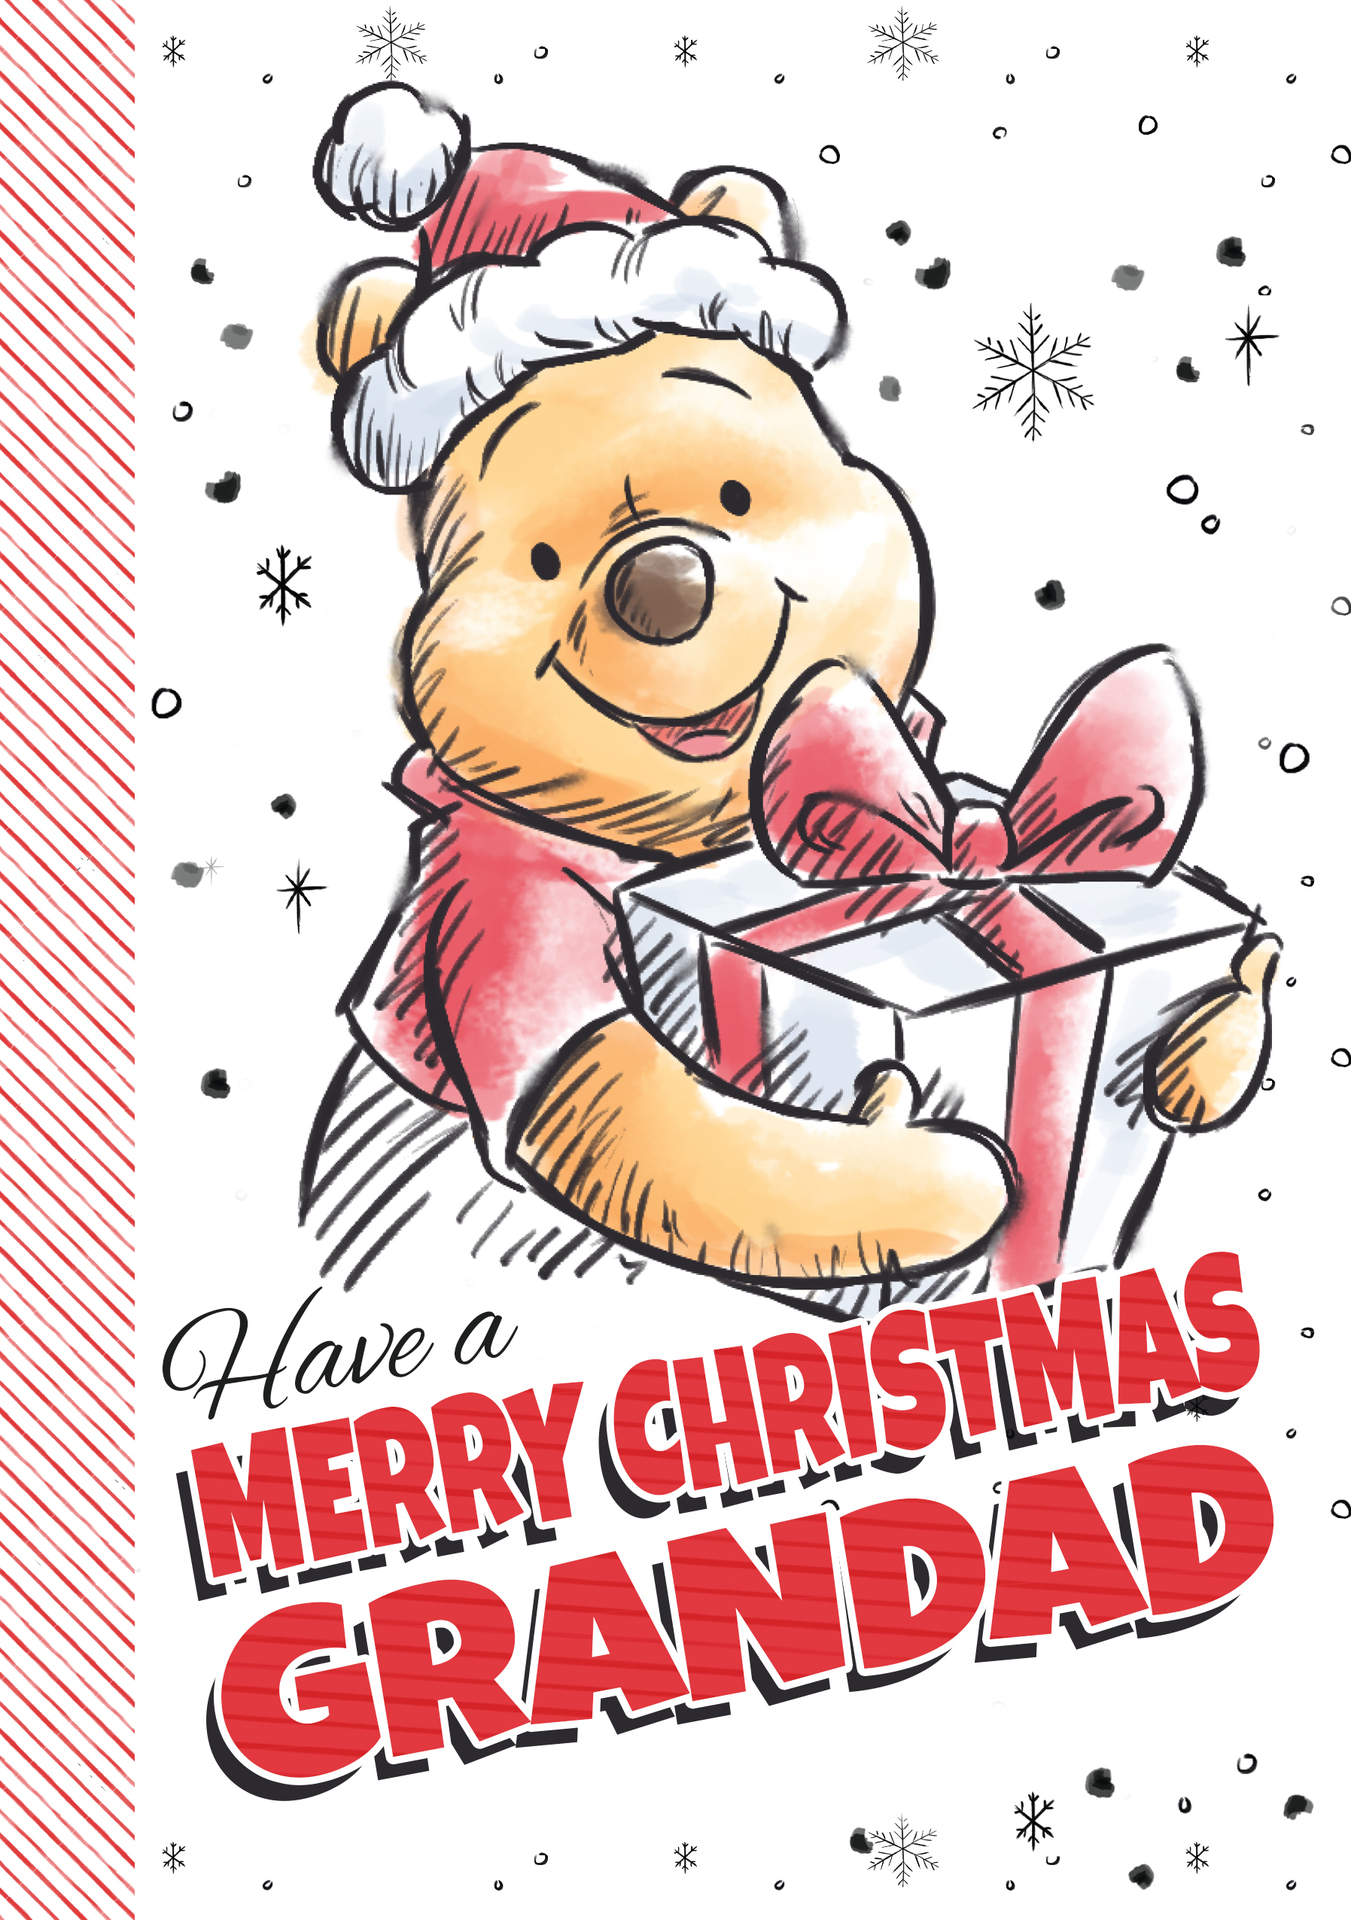 Disney's Winnie the Pooh Grandad Christmas Card